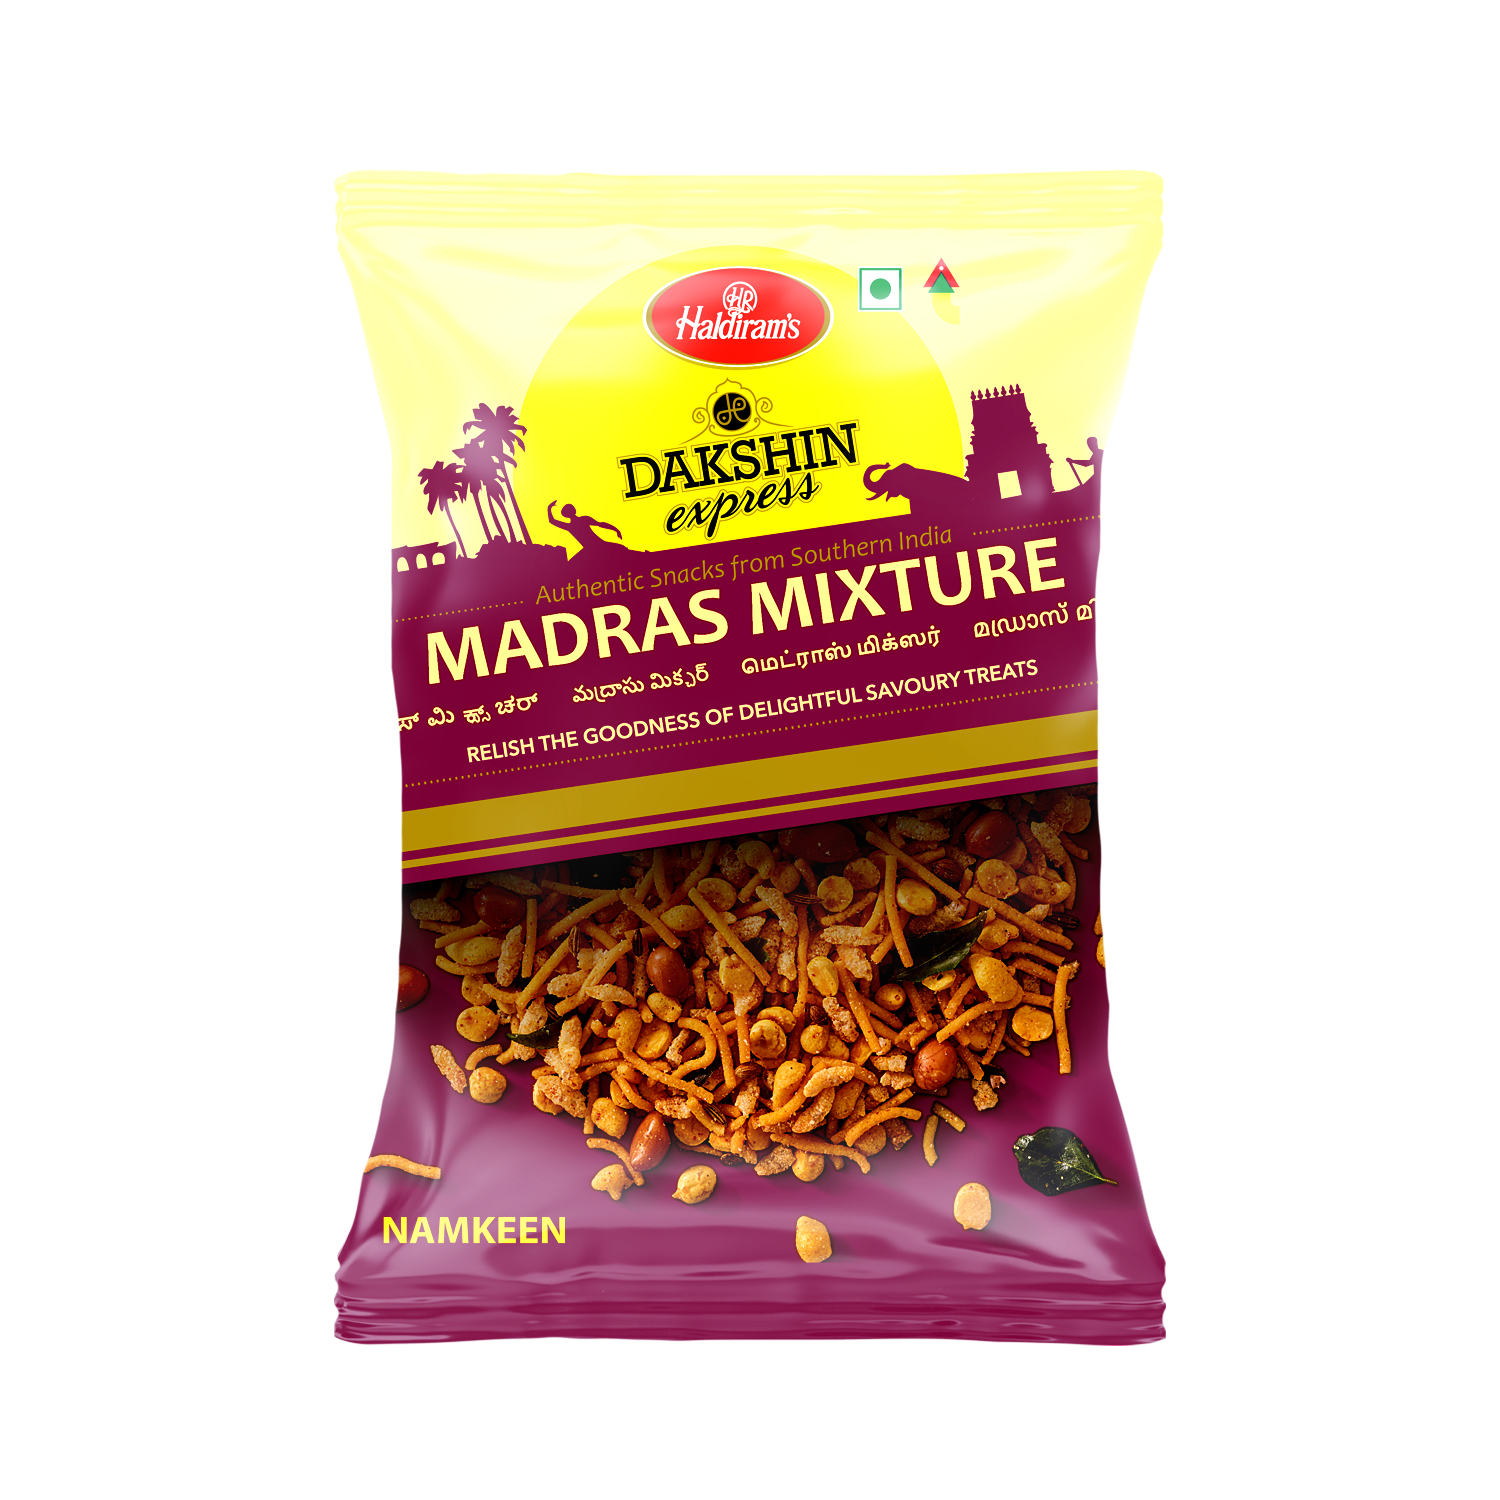 Dakshin Madras Mixture